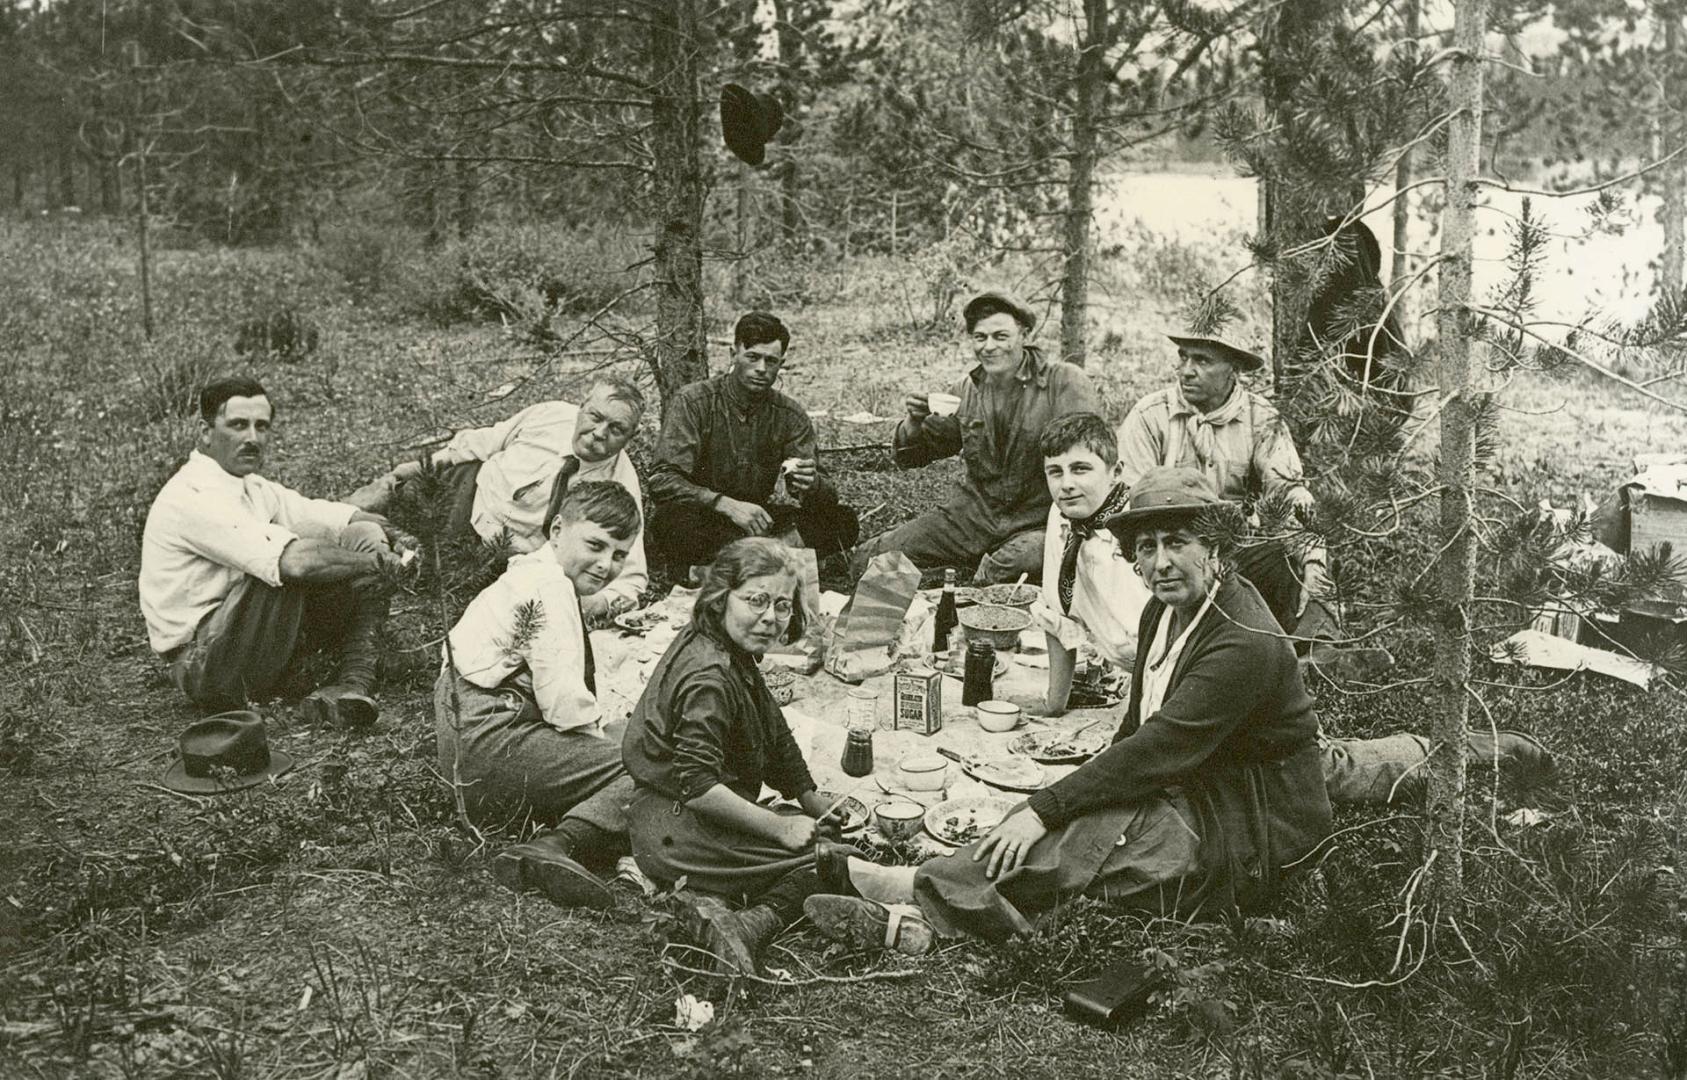 Arthur Conan Doyle and family on picnic in Jasper Park, Alberta, Canada, 1923